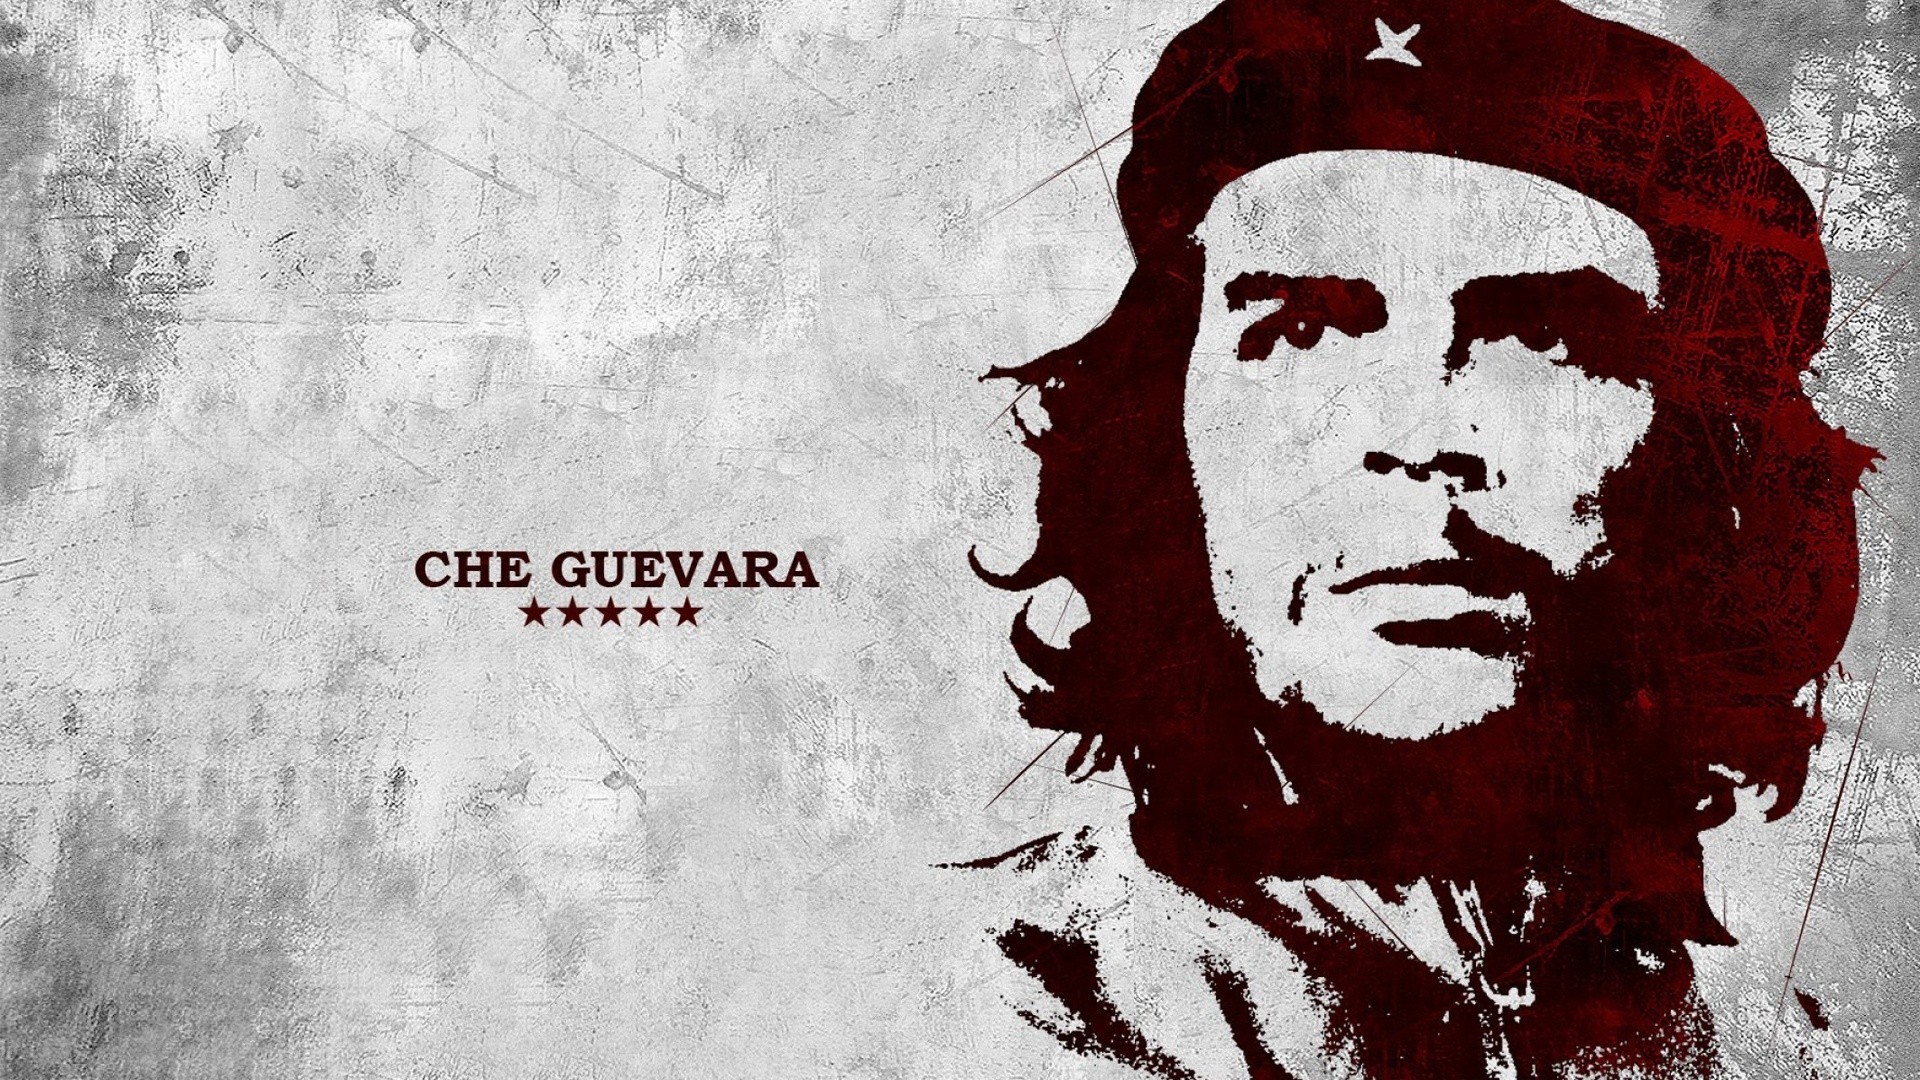 General 1920x1080 communism Che Guevara socialism men artwork Political Figure Argentinian deceased